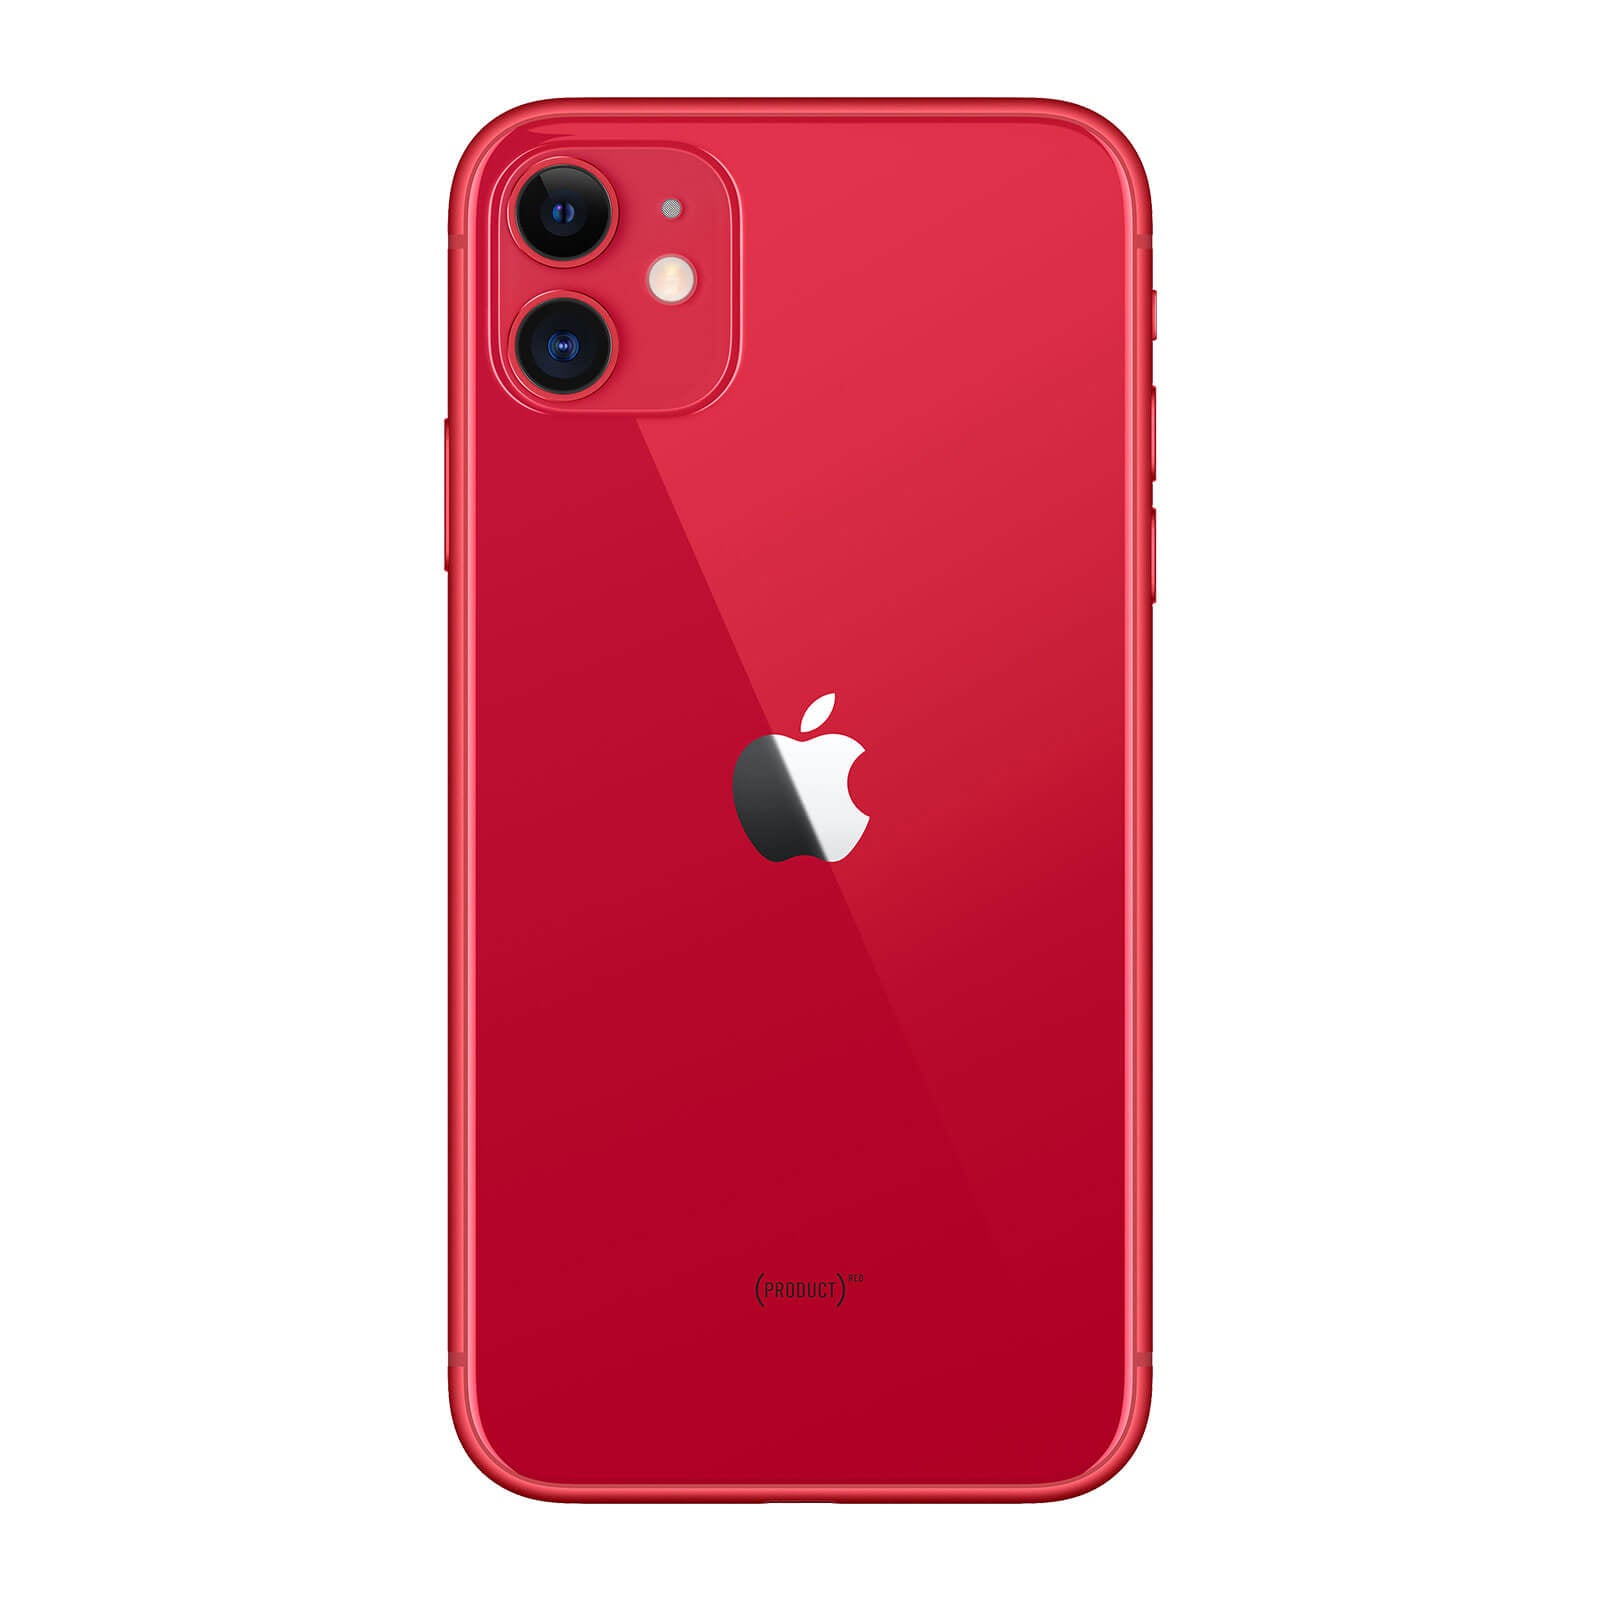 Apple iPhone 11 64GB Red Good - Unlocked